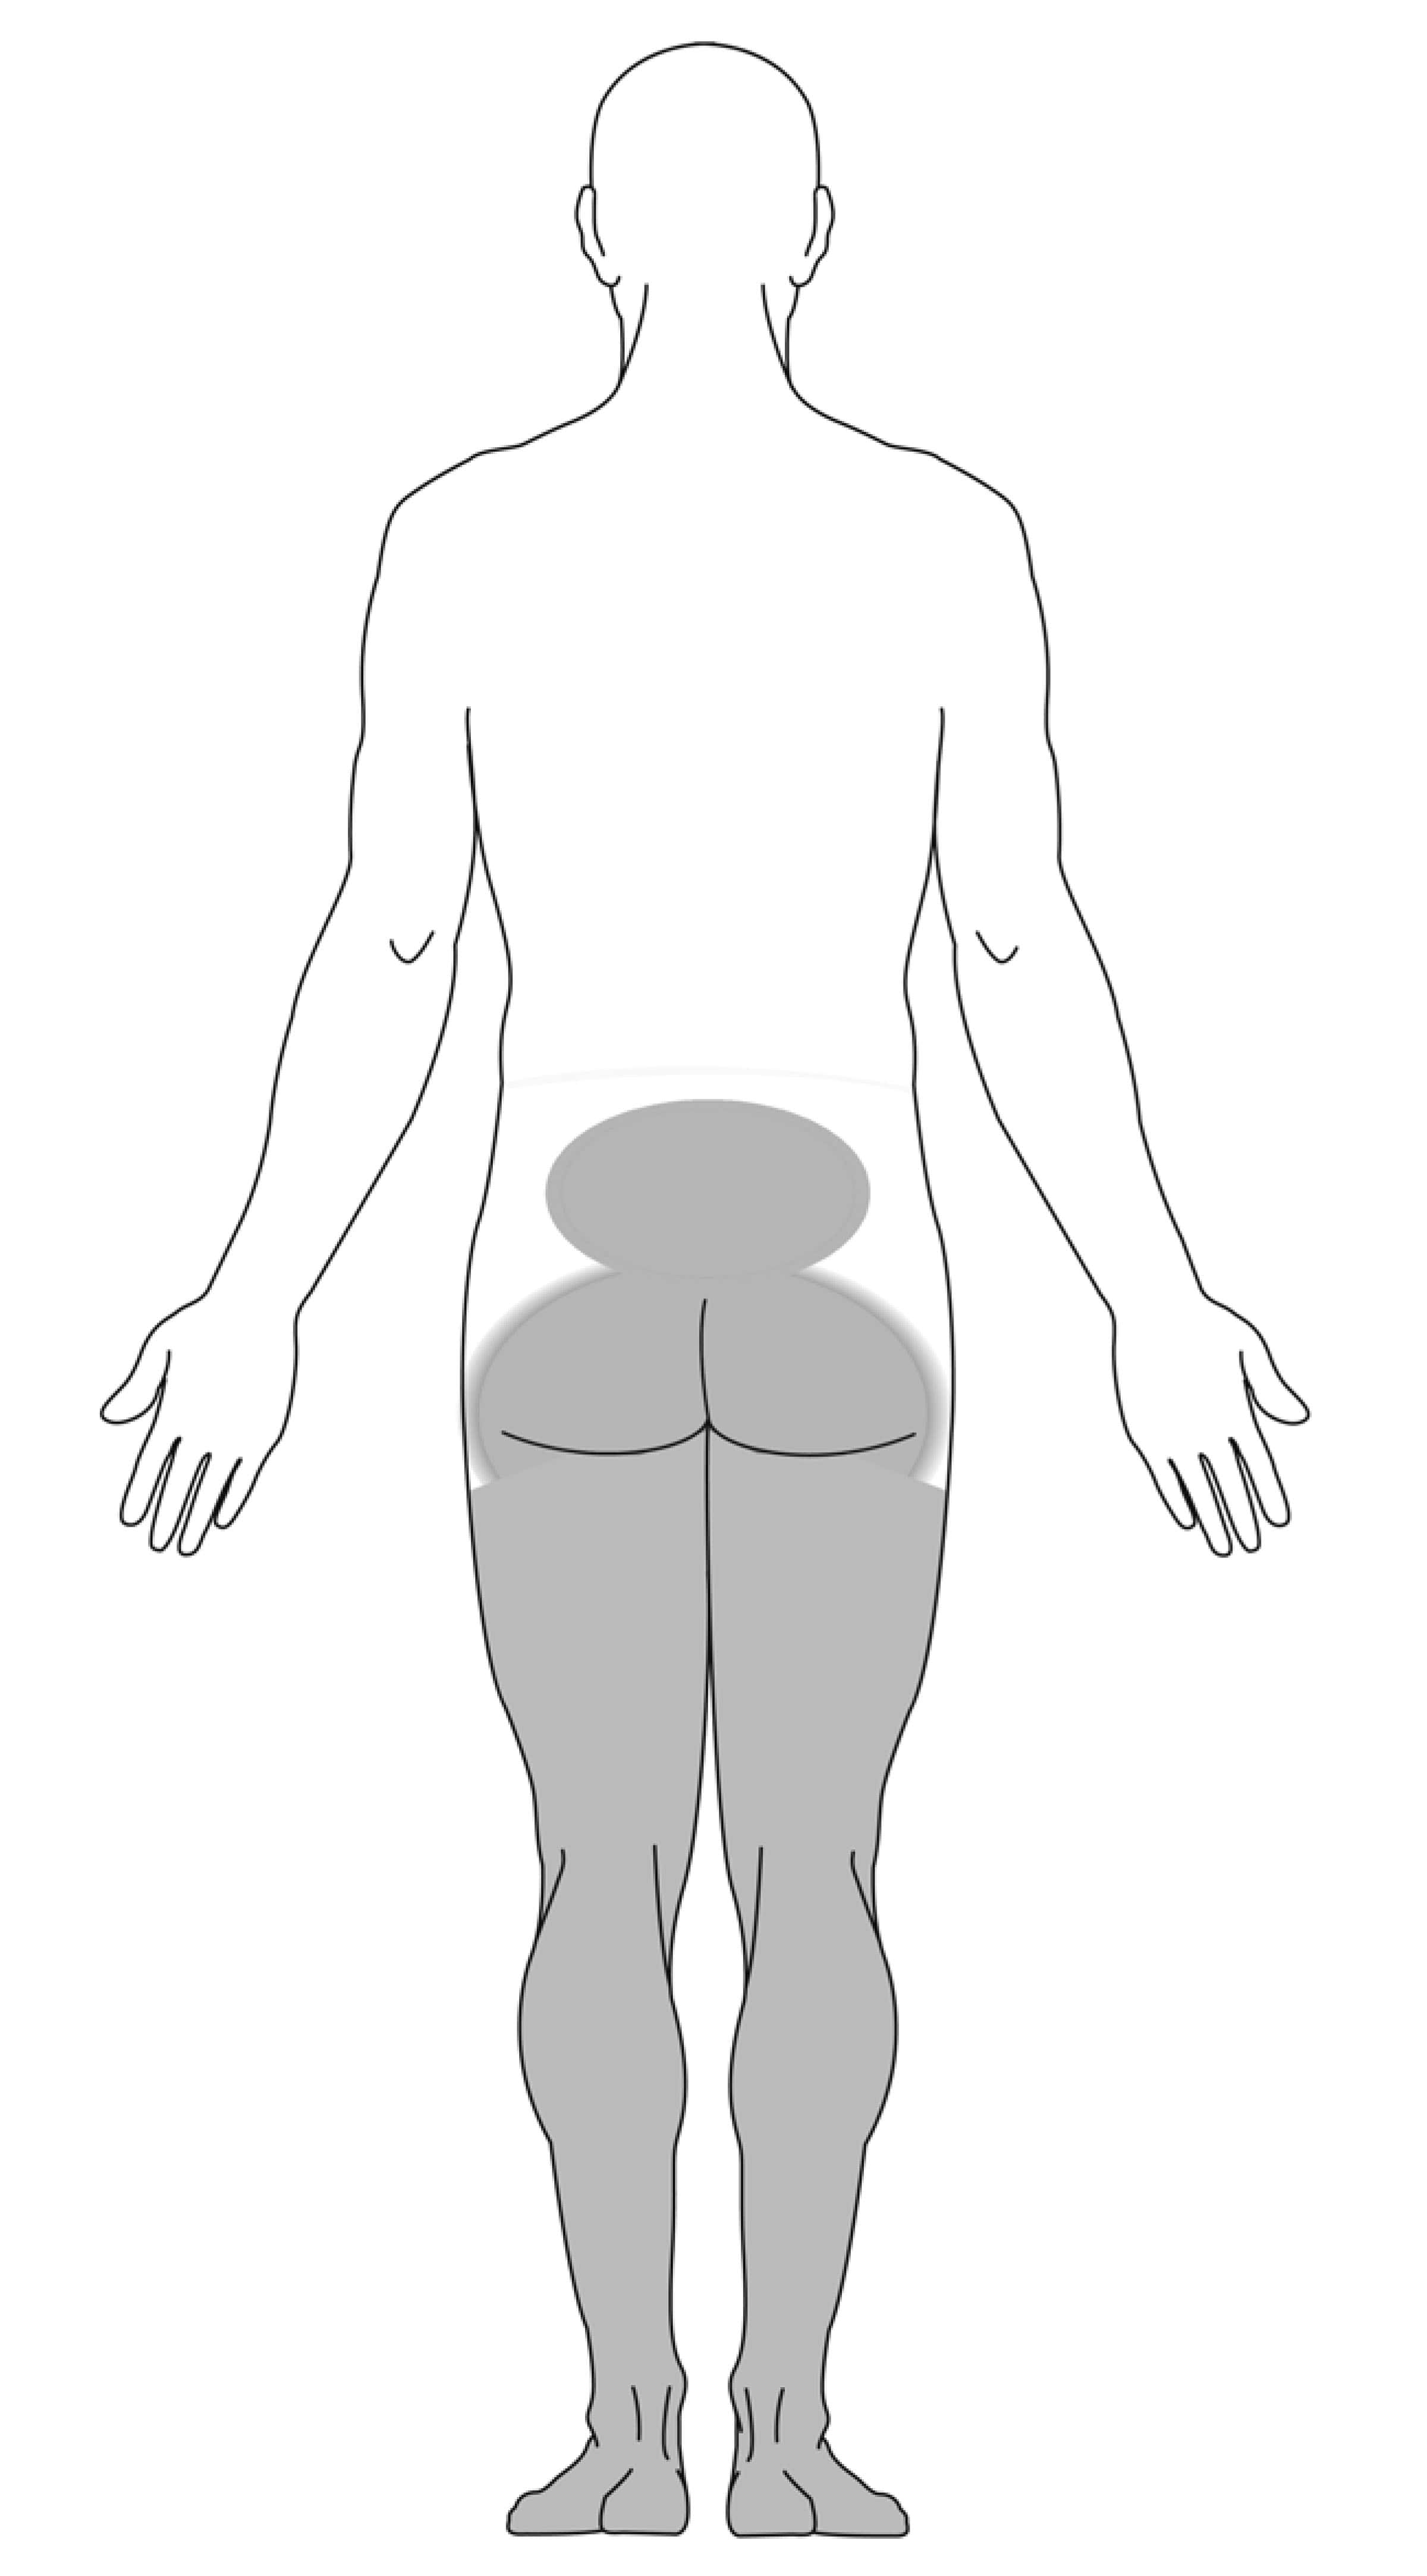 pain diagram for cauda equina syndrome